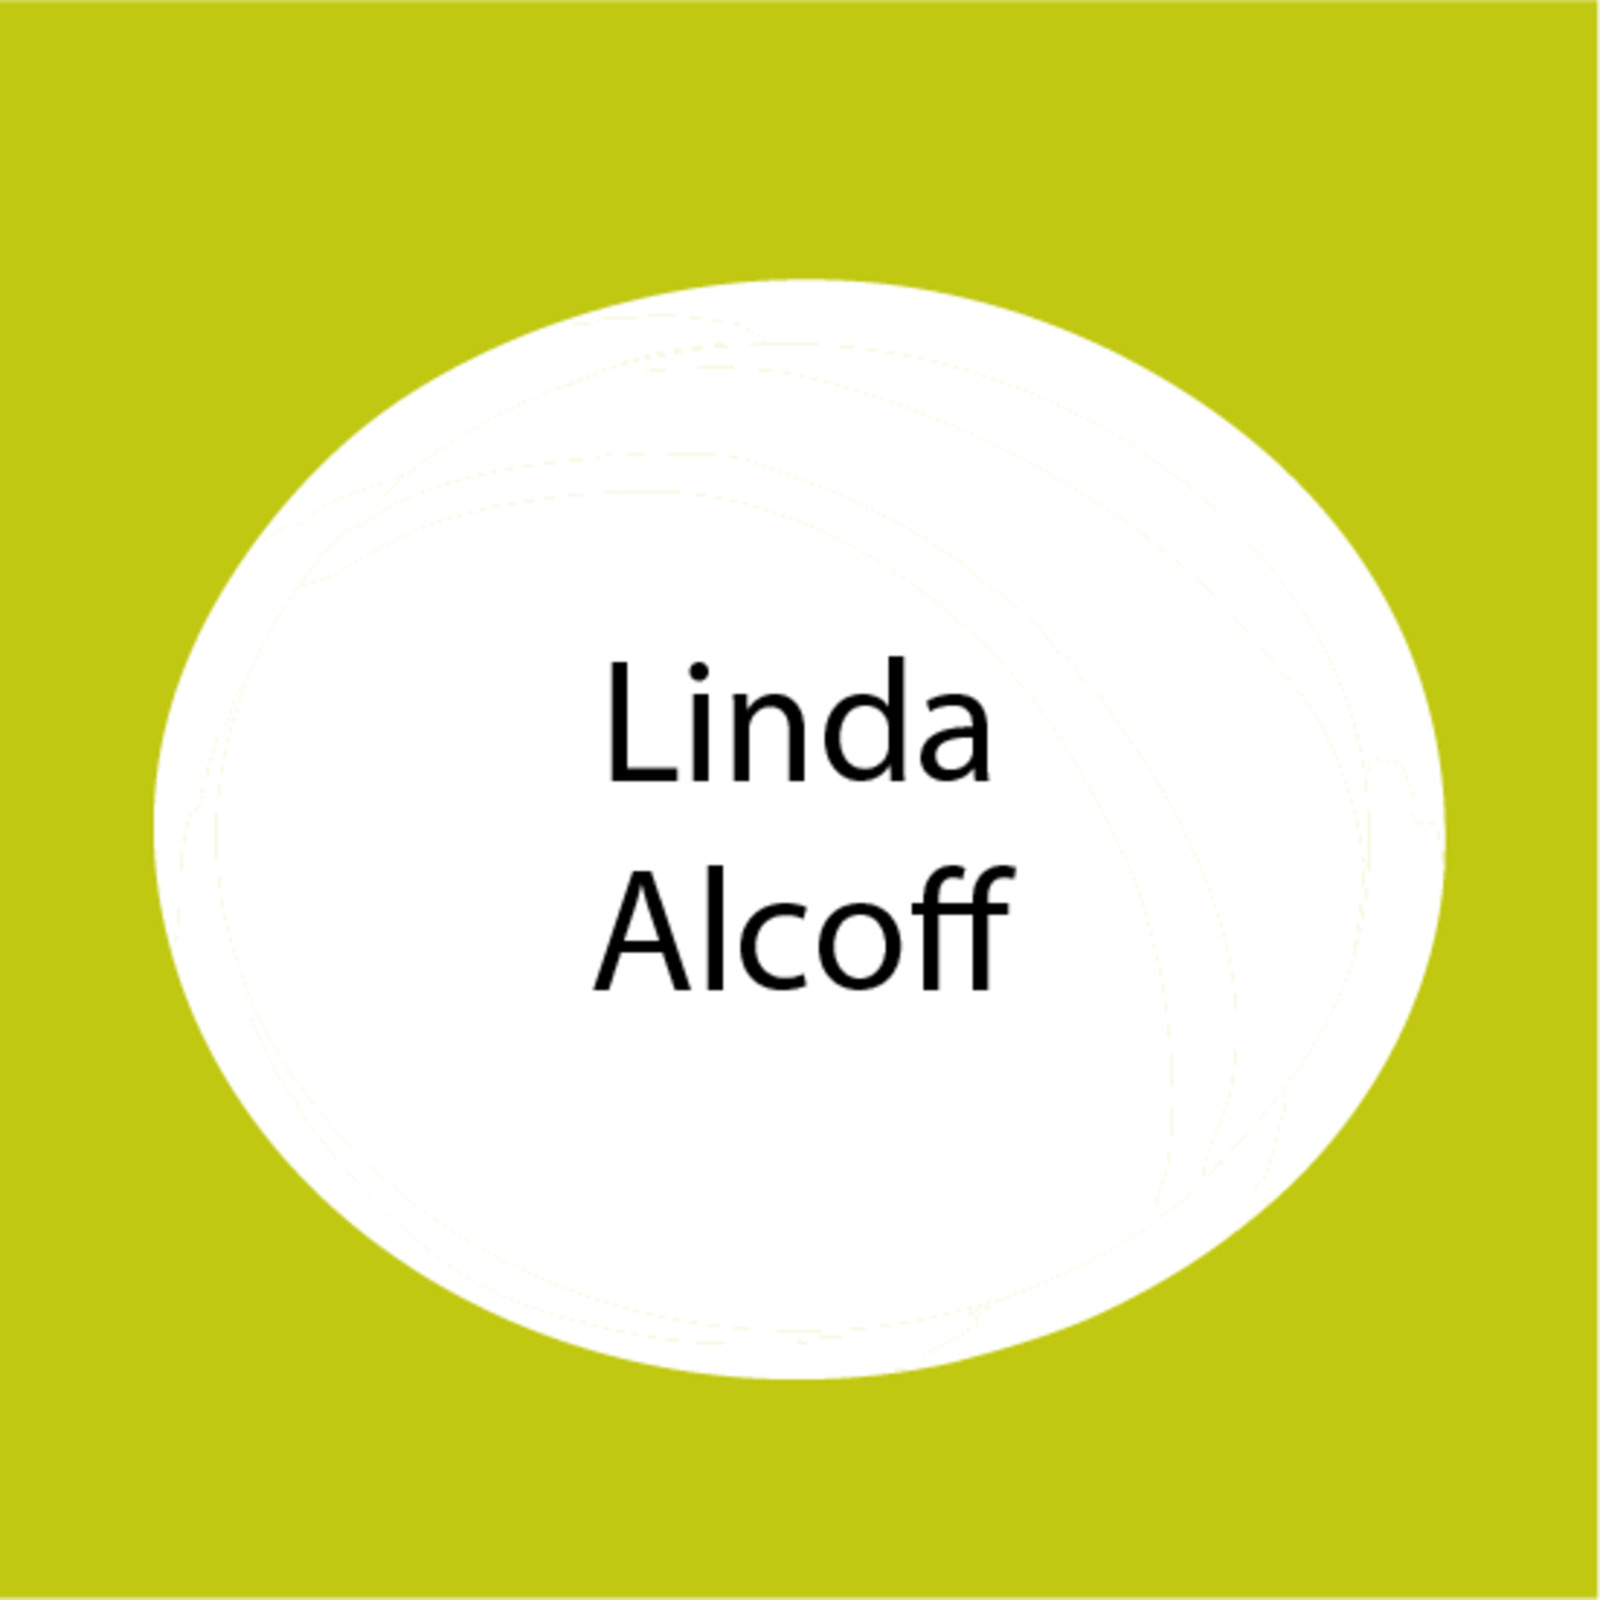 Linda Alcoff